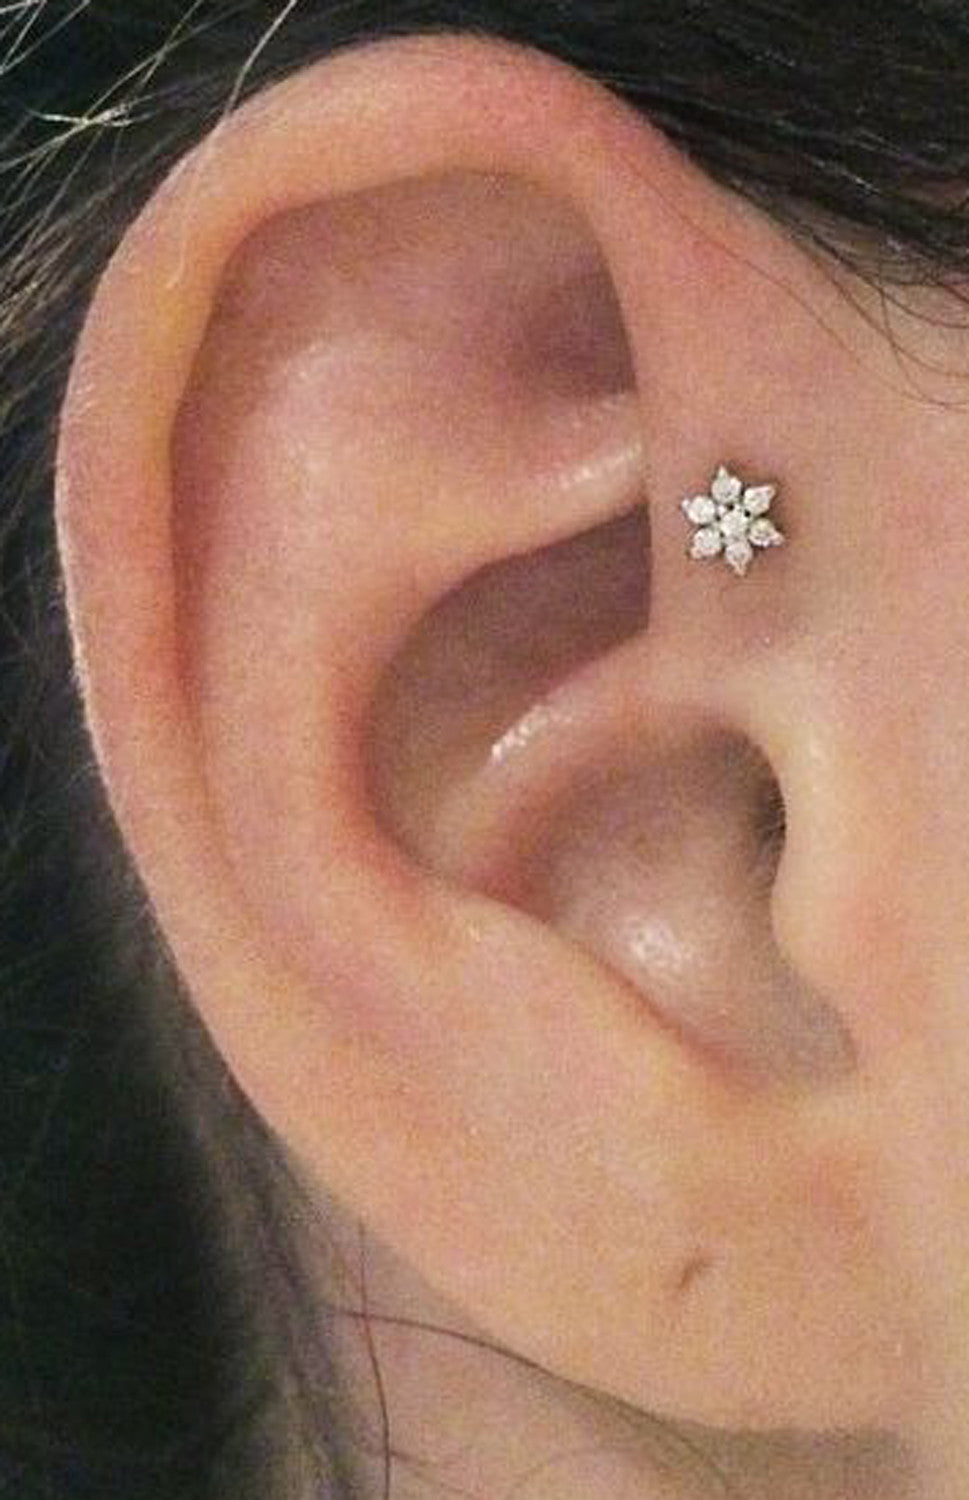 Simple Ear Piercing Ideas at MyBodiArt.com - Crystal CZ Flower Tragus Earring Stud Triple Forward Helix